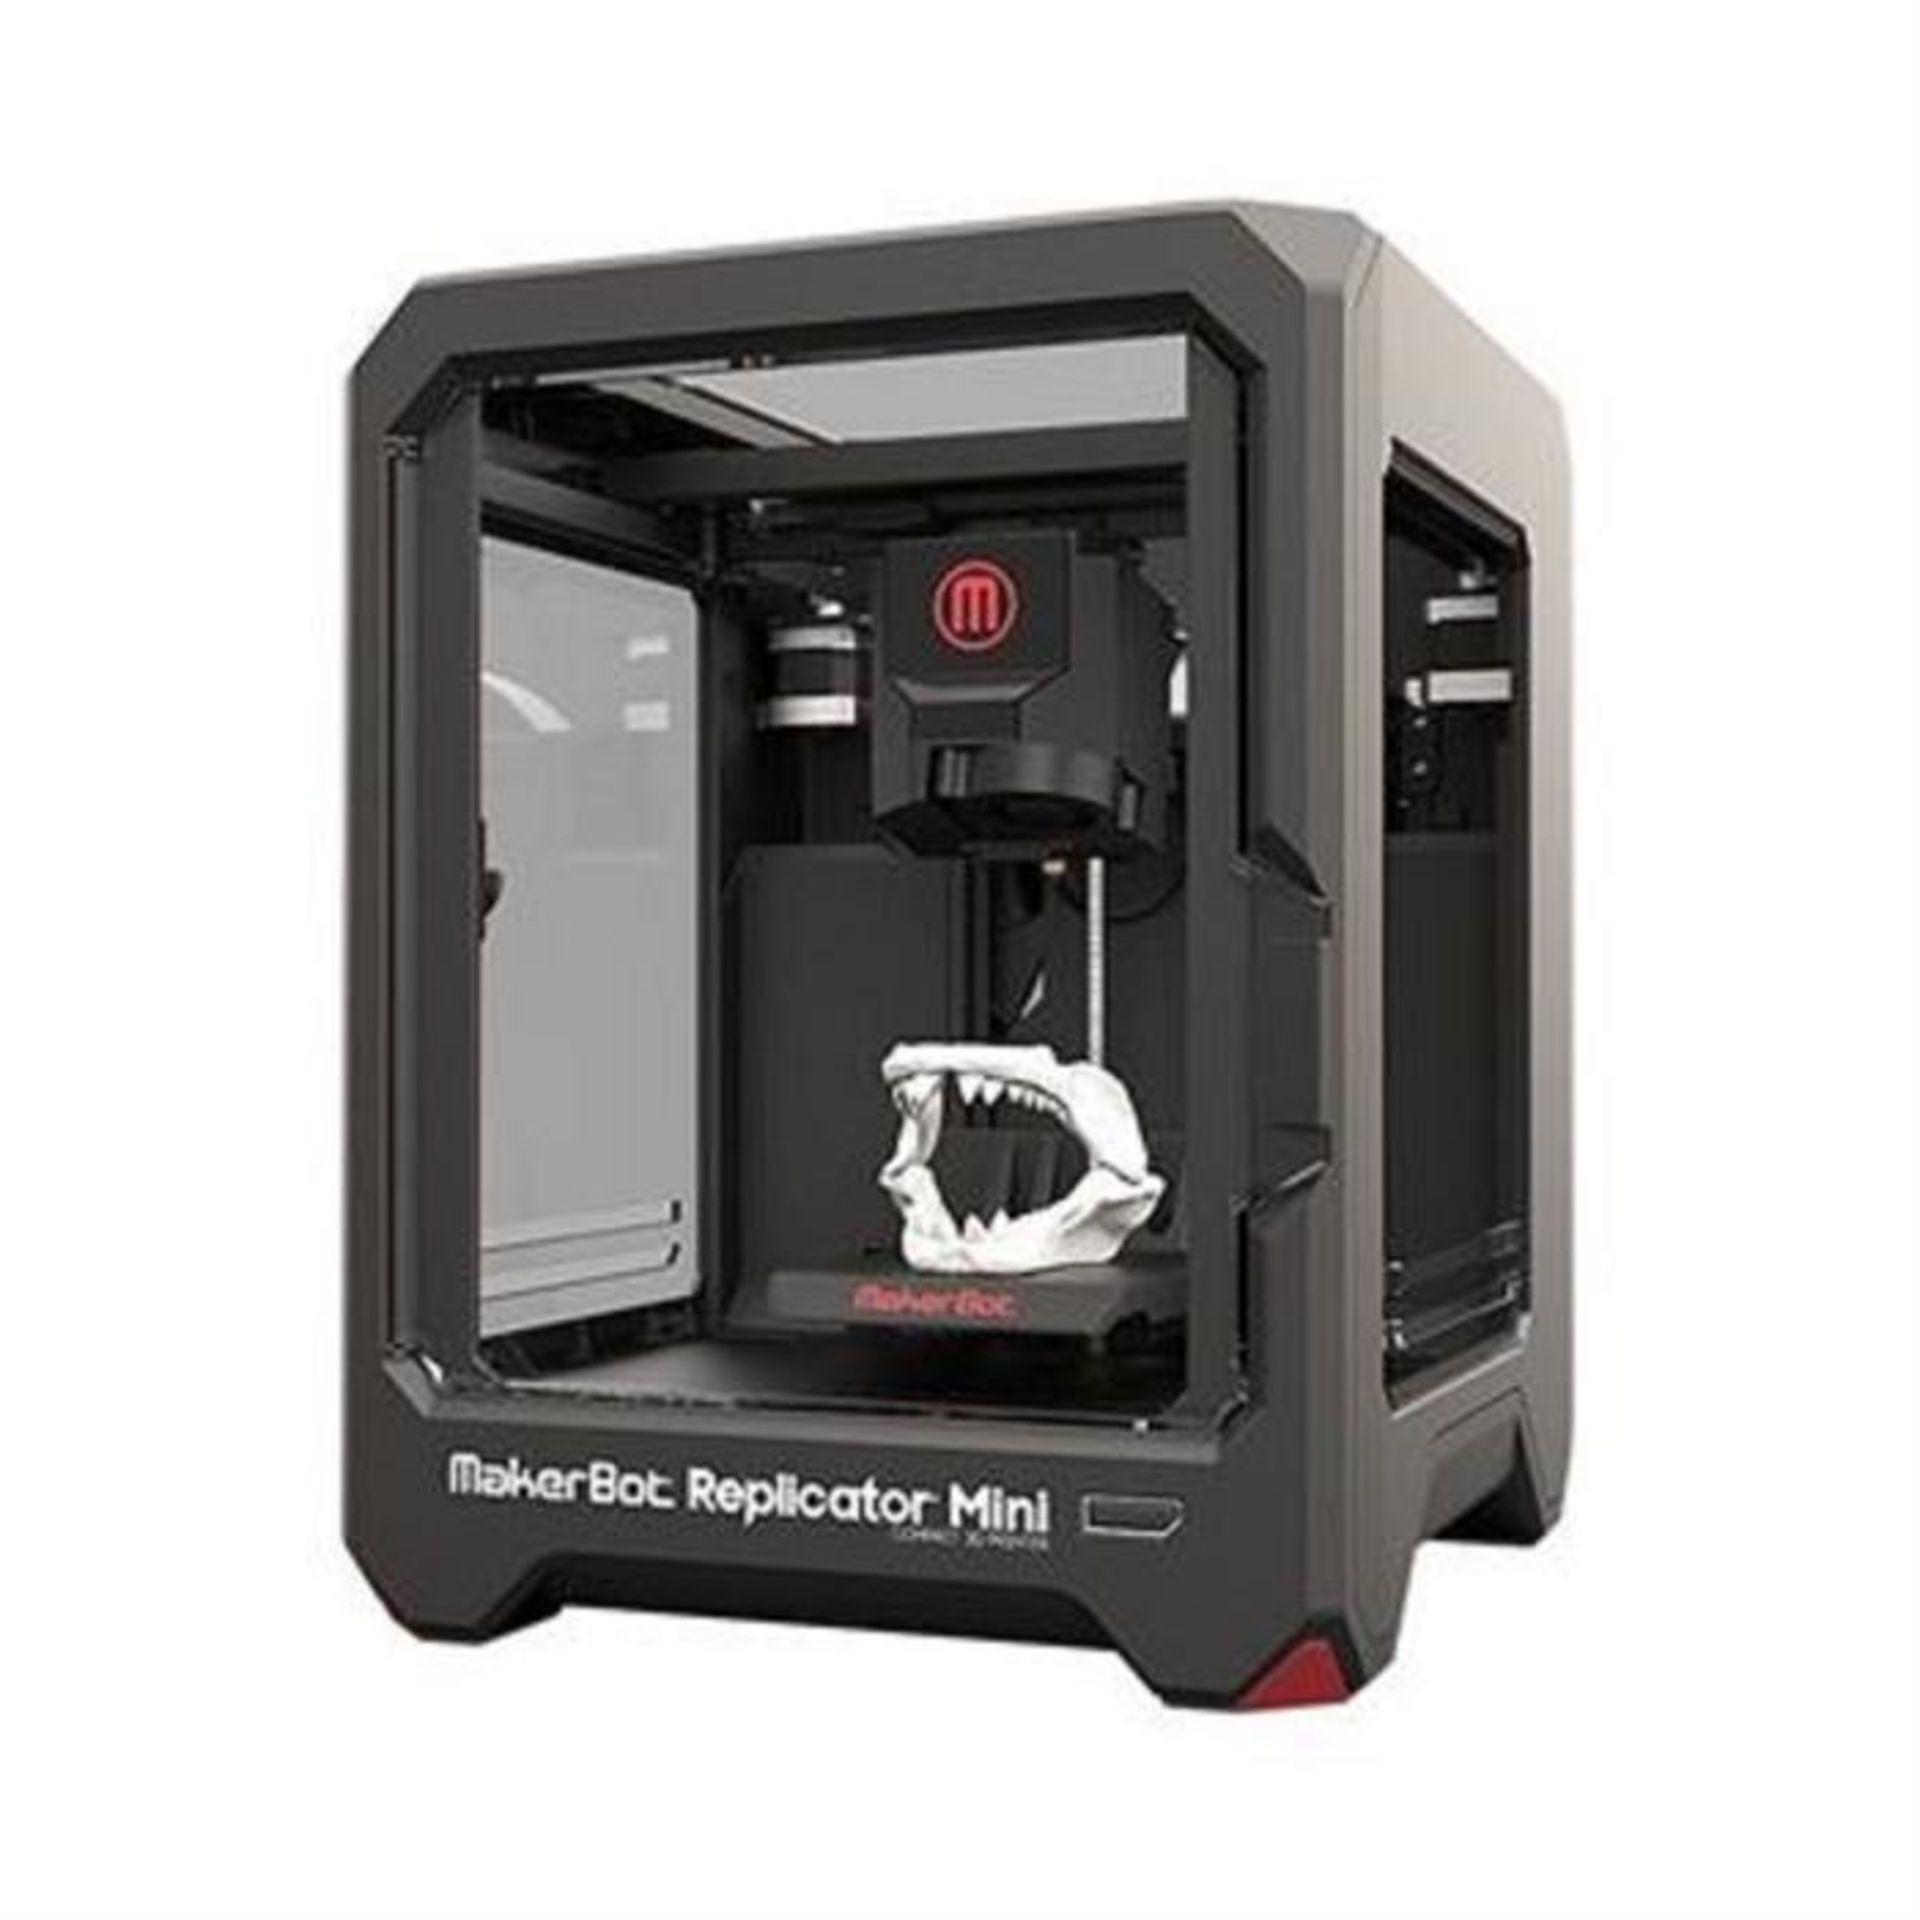 New & Boxed MakerBot Replicator Mini Compact 3D Printer - 1005CR 8459551